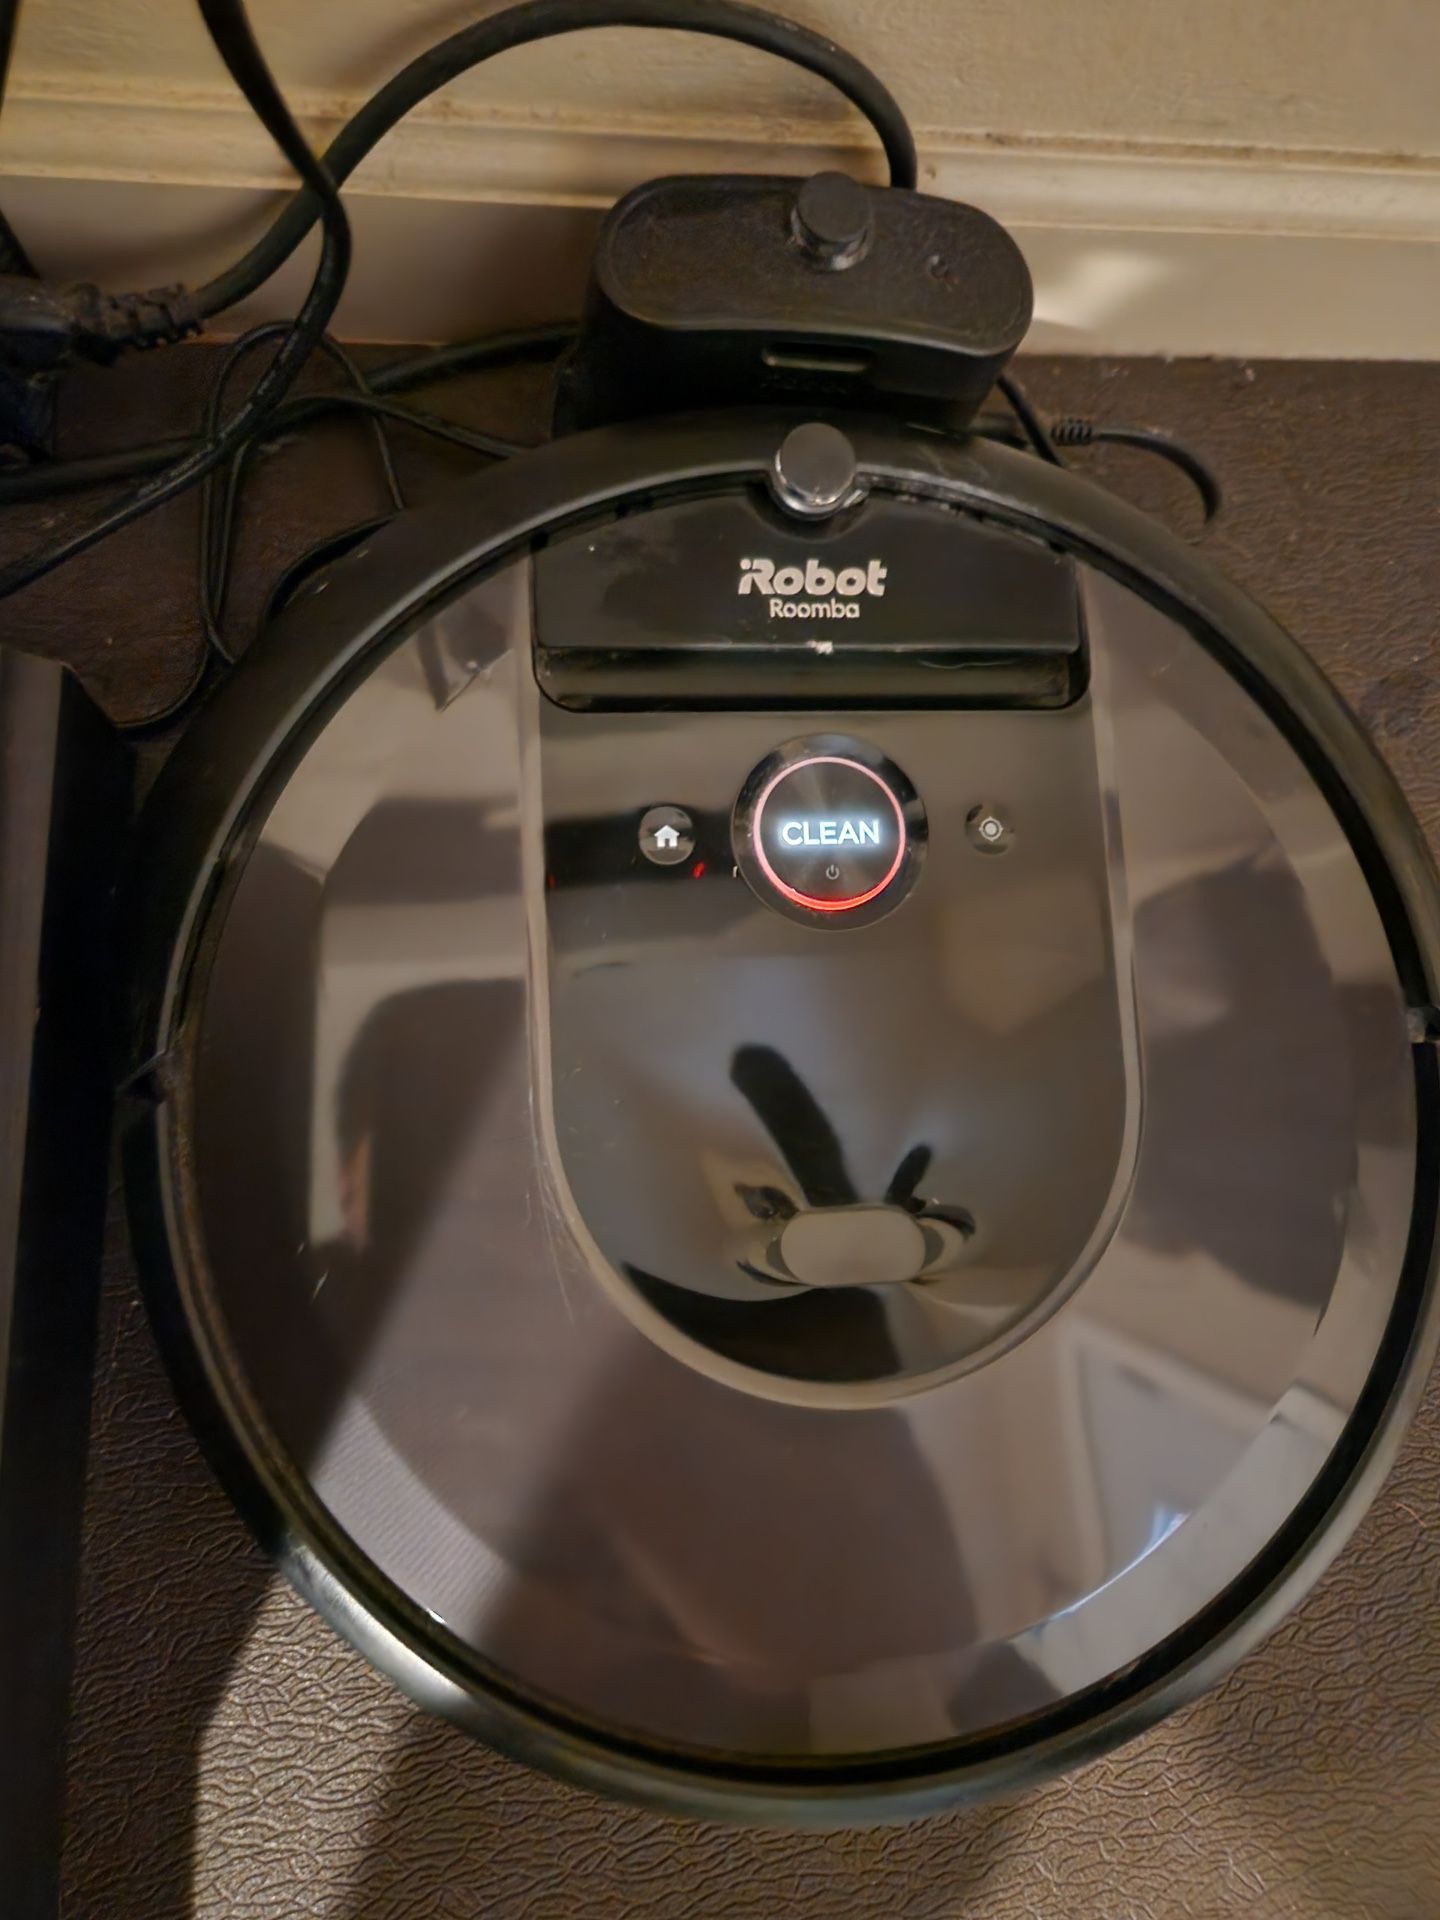 iRobot - Roomba i7 Wi-Fi Connected Robot Vacuum - Charcoal